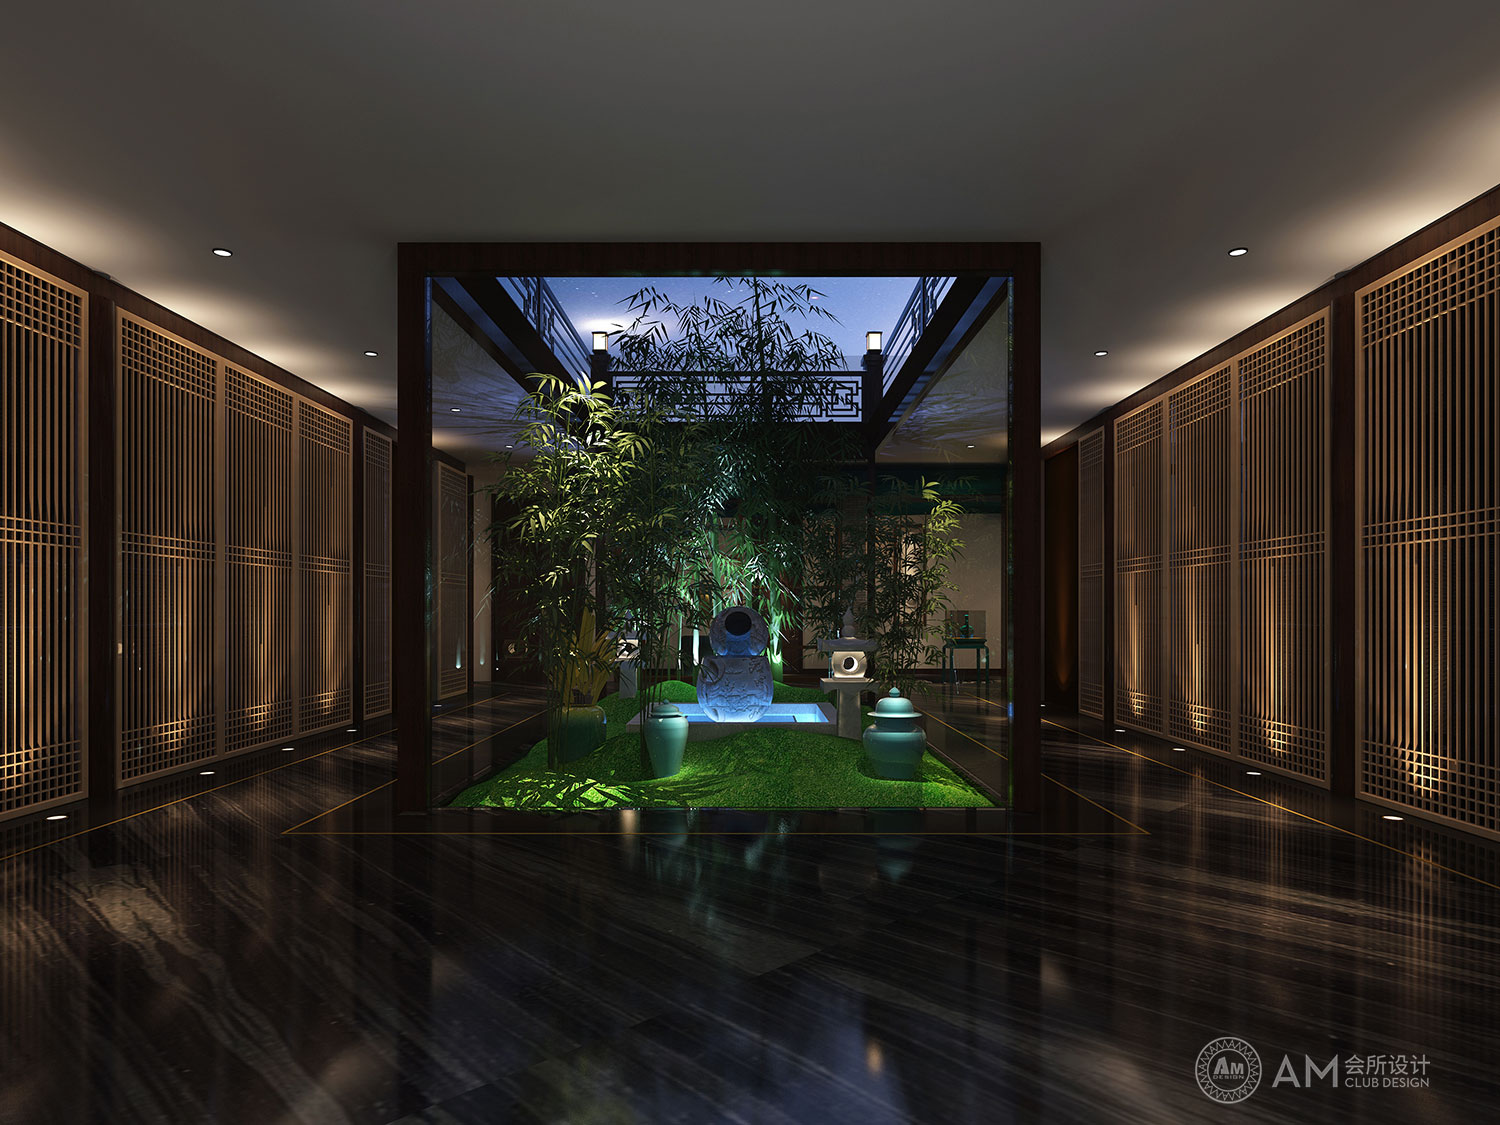 AM DESIGN | Atrium design of qilinhui Top Spa Club